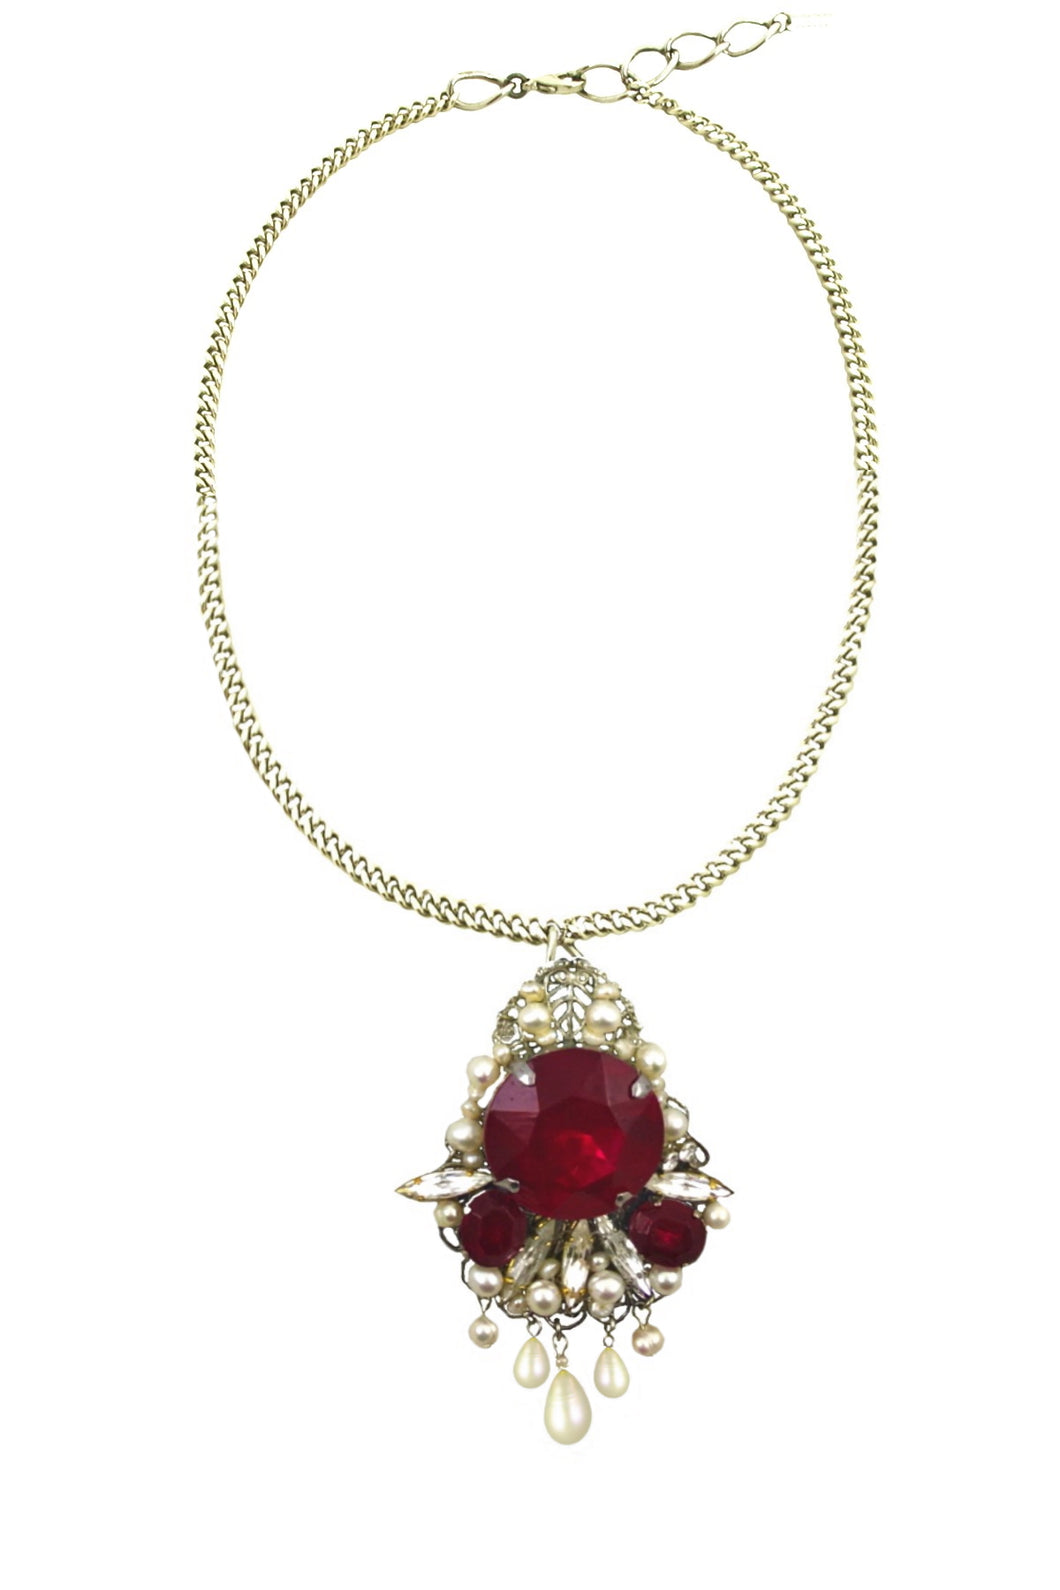 Alexandra Pearls and Swarovski Crystals necklace